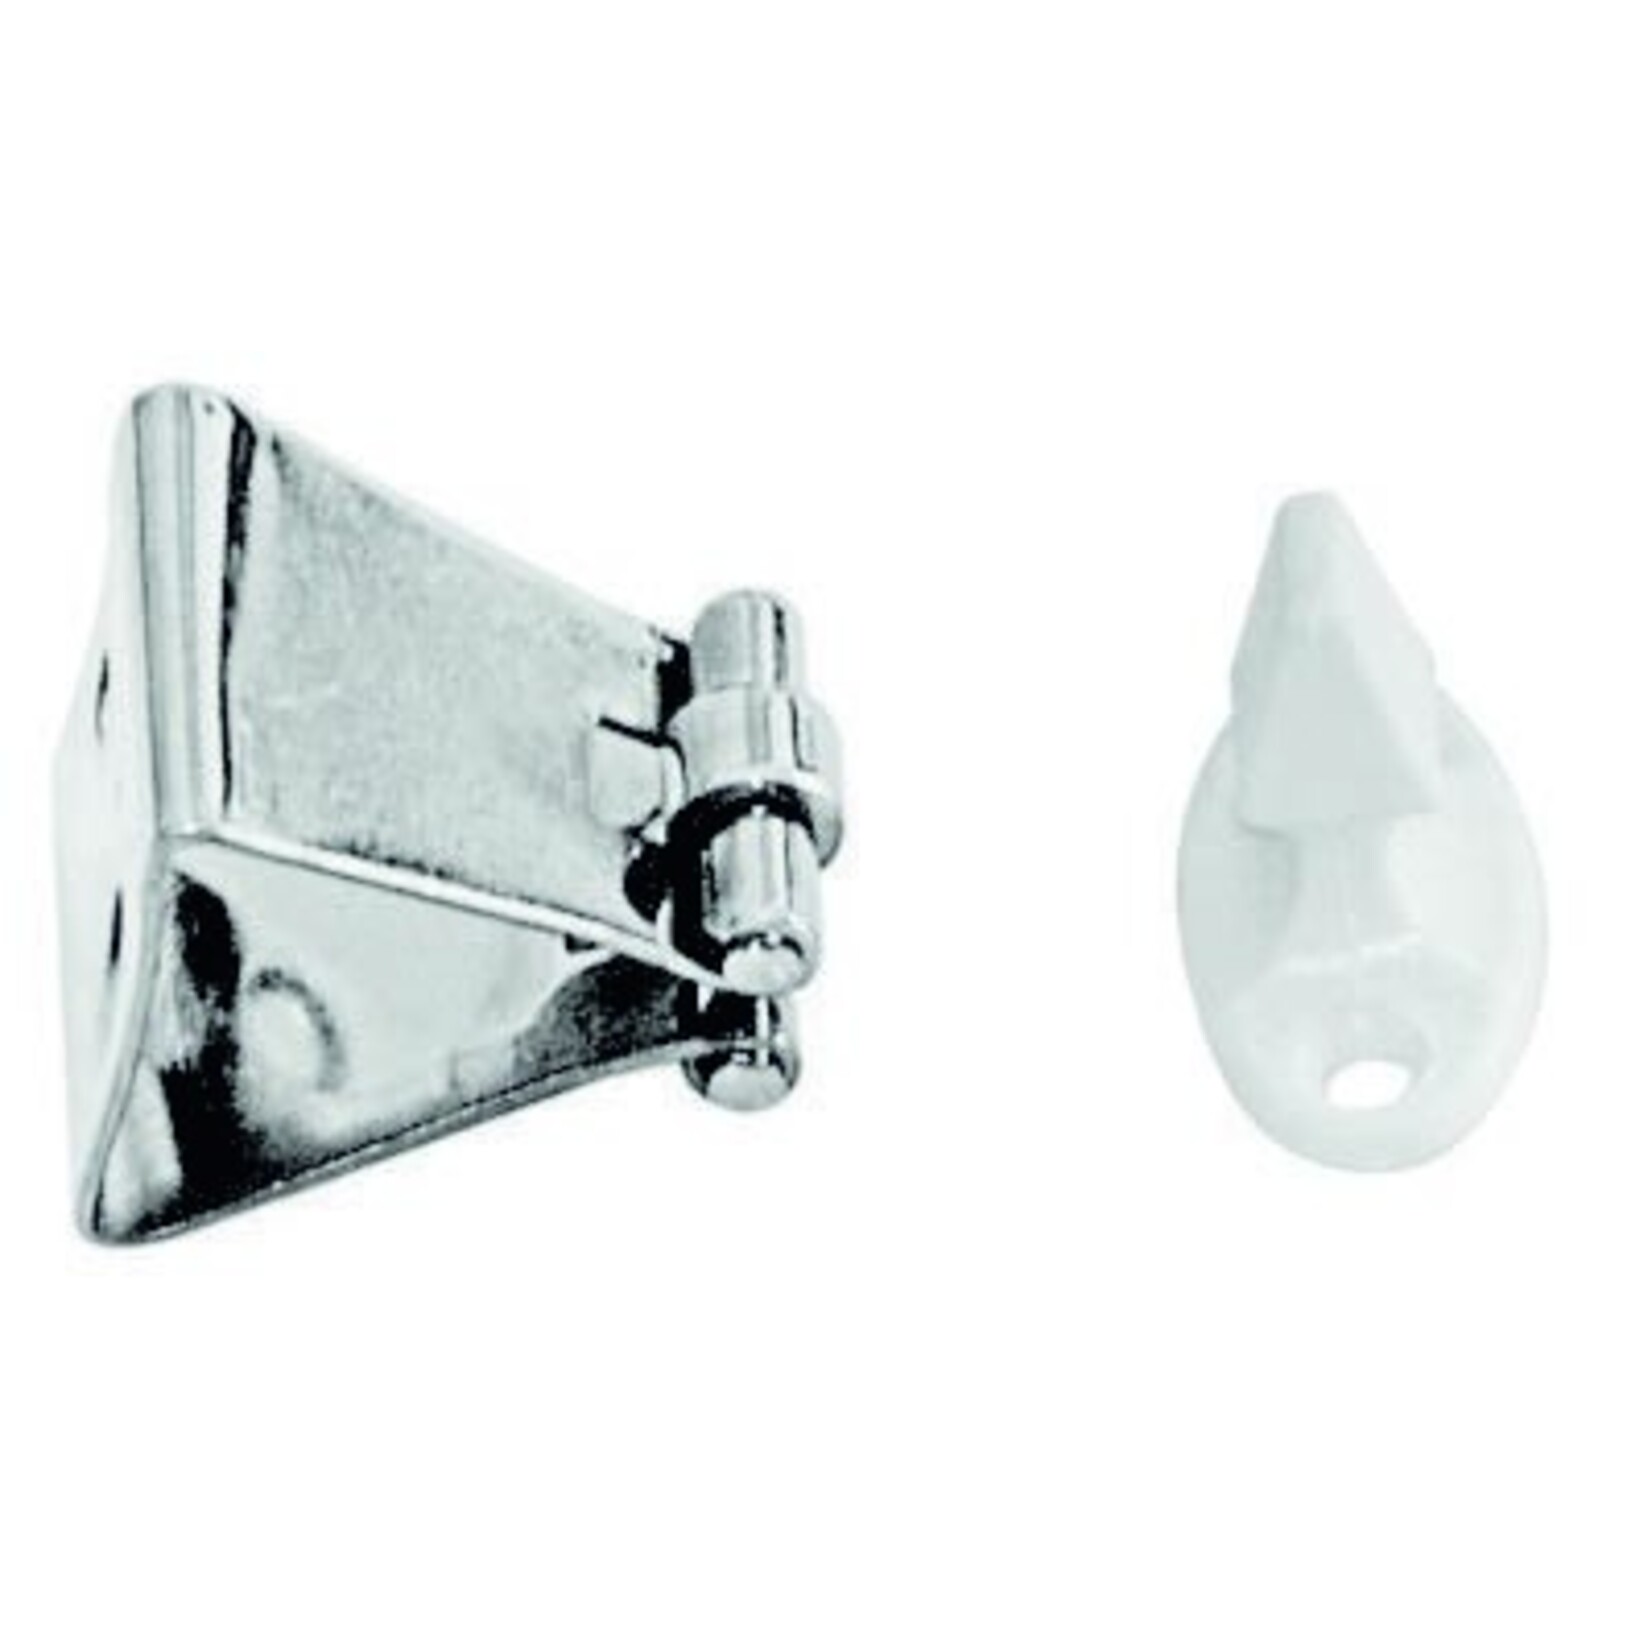 Plastimo Door holder ss 38x40x70mm